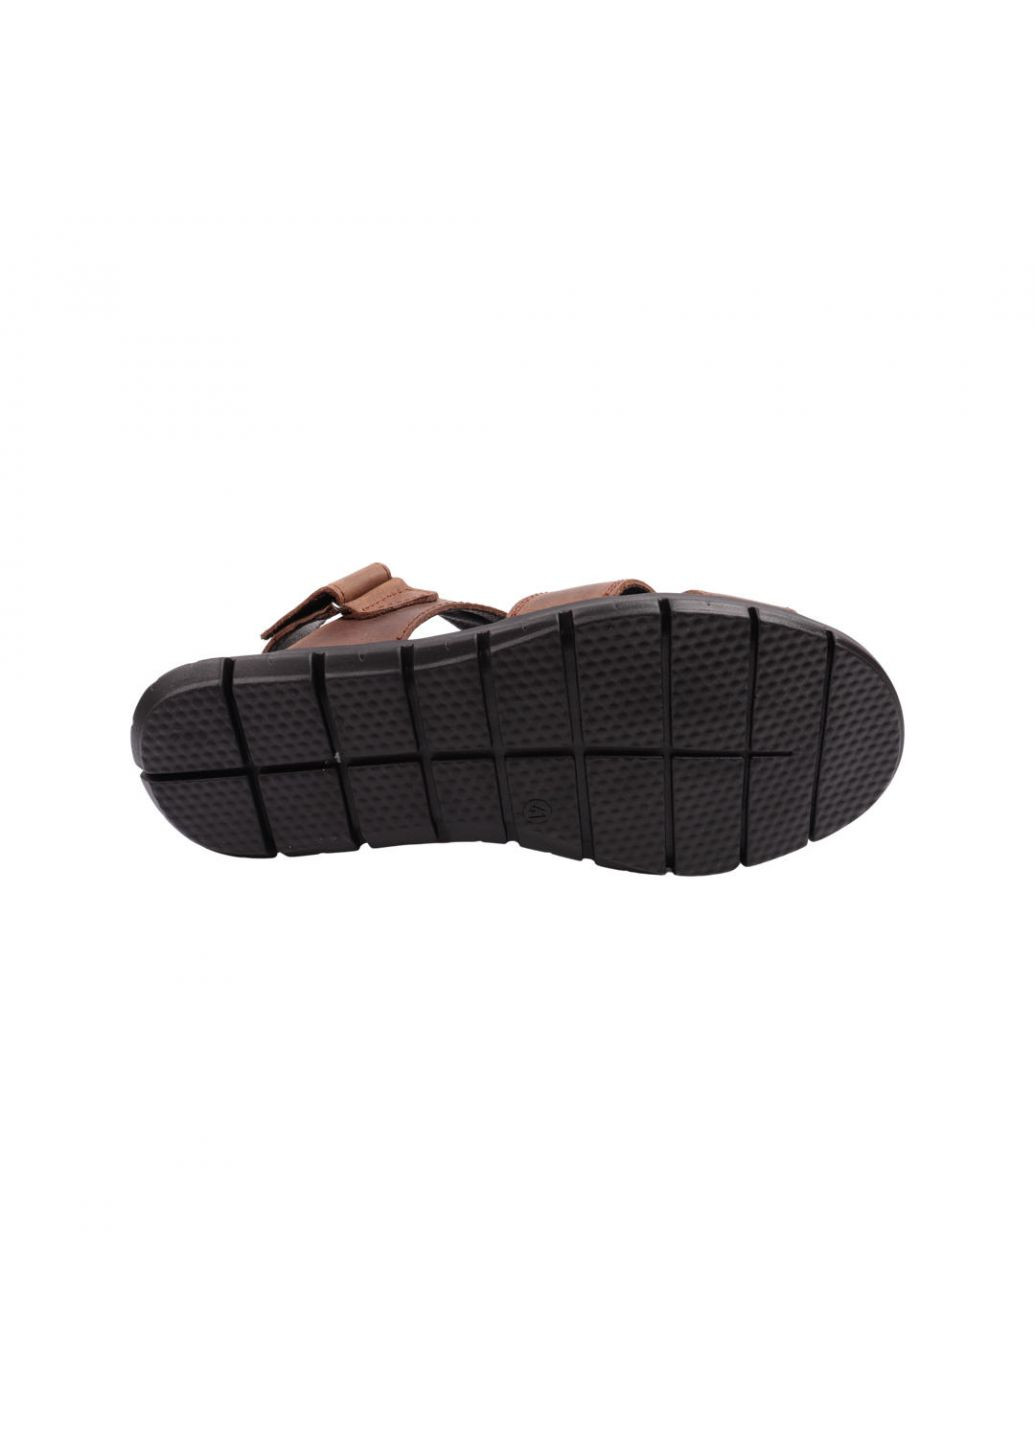 сандали мужские кабир натуральная кожа Maxus Shoes